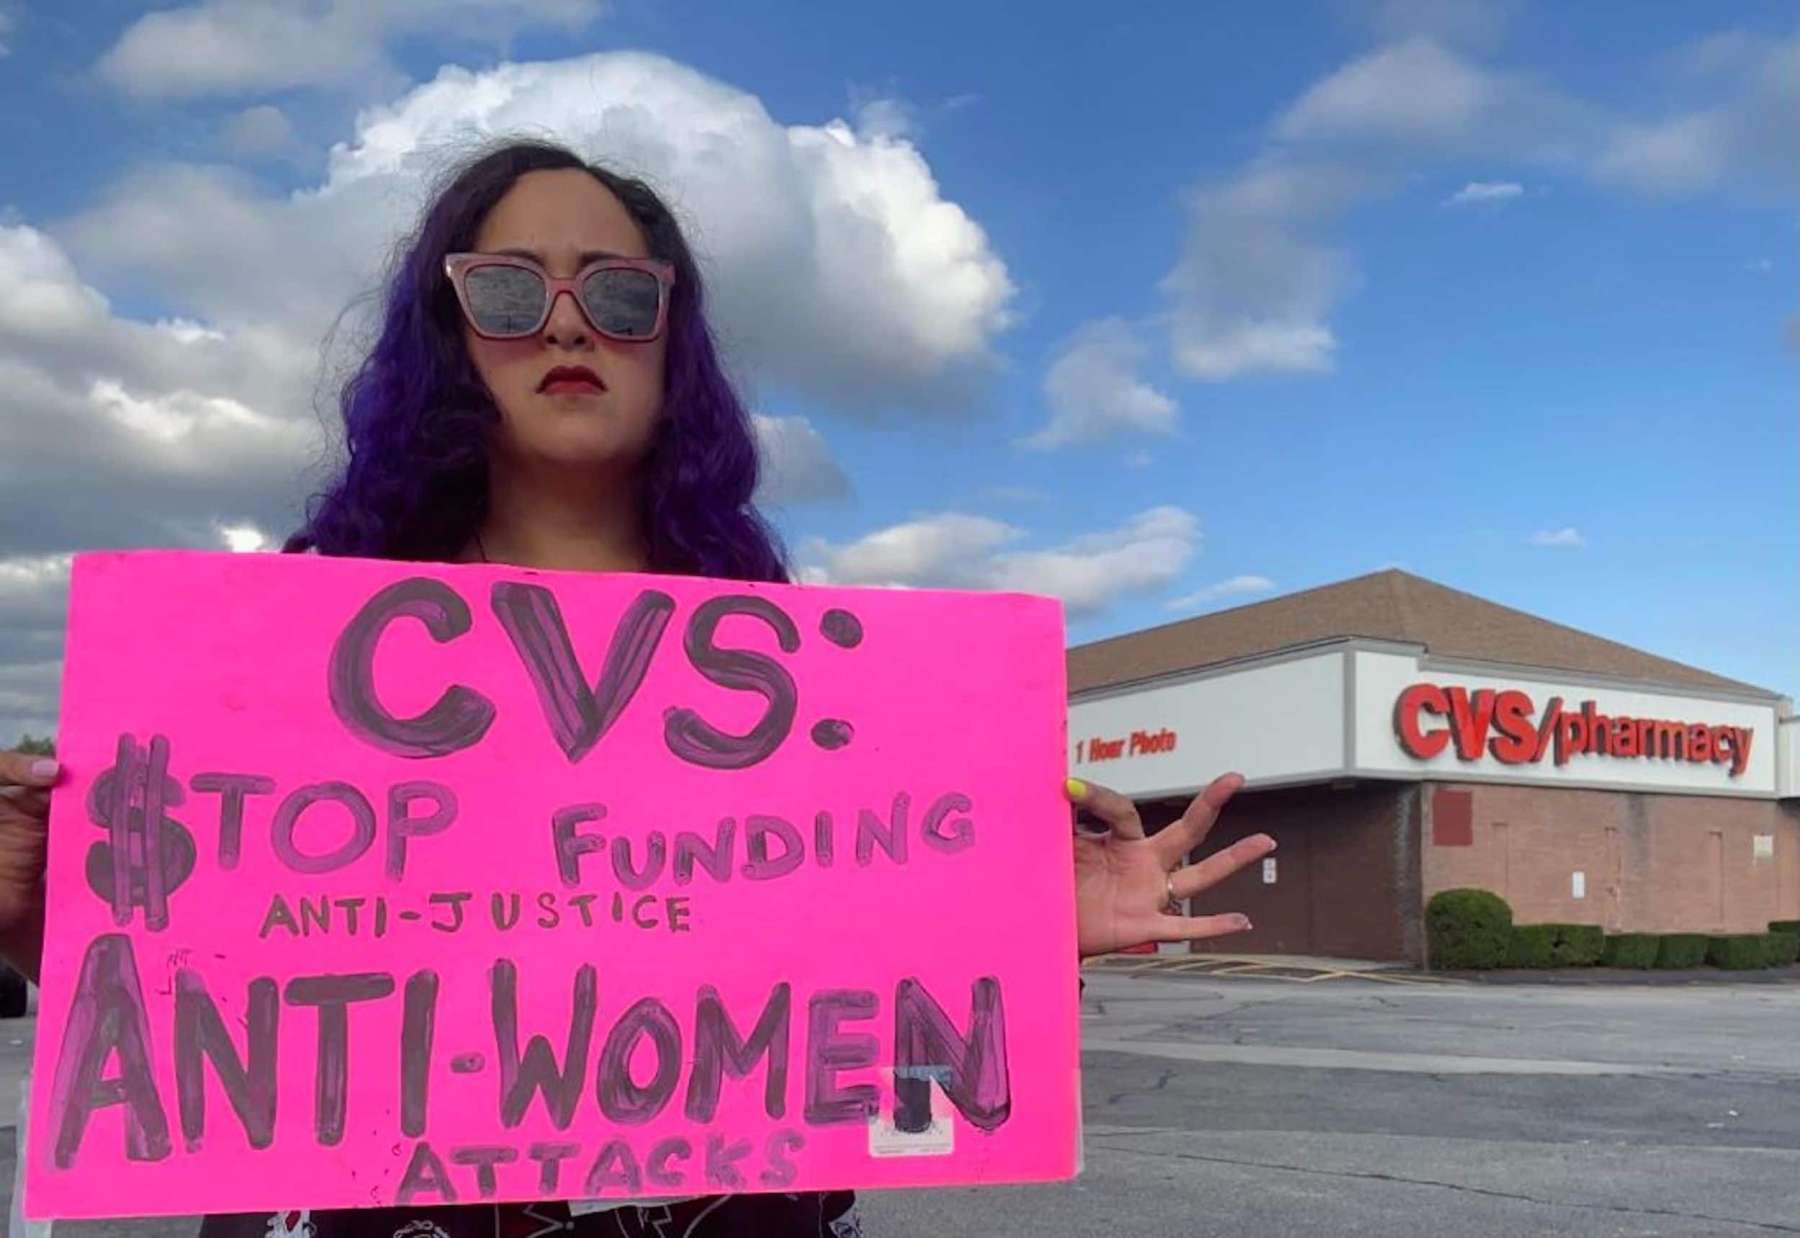 CVS funded anti-abortion Texas legislators – The Womxn Project calls for boycott